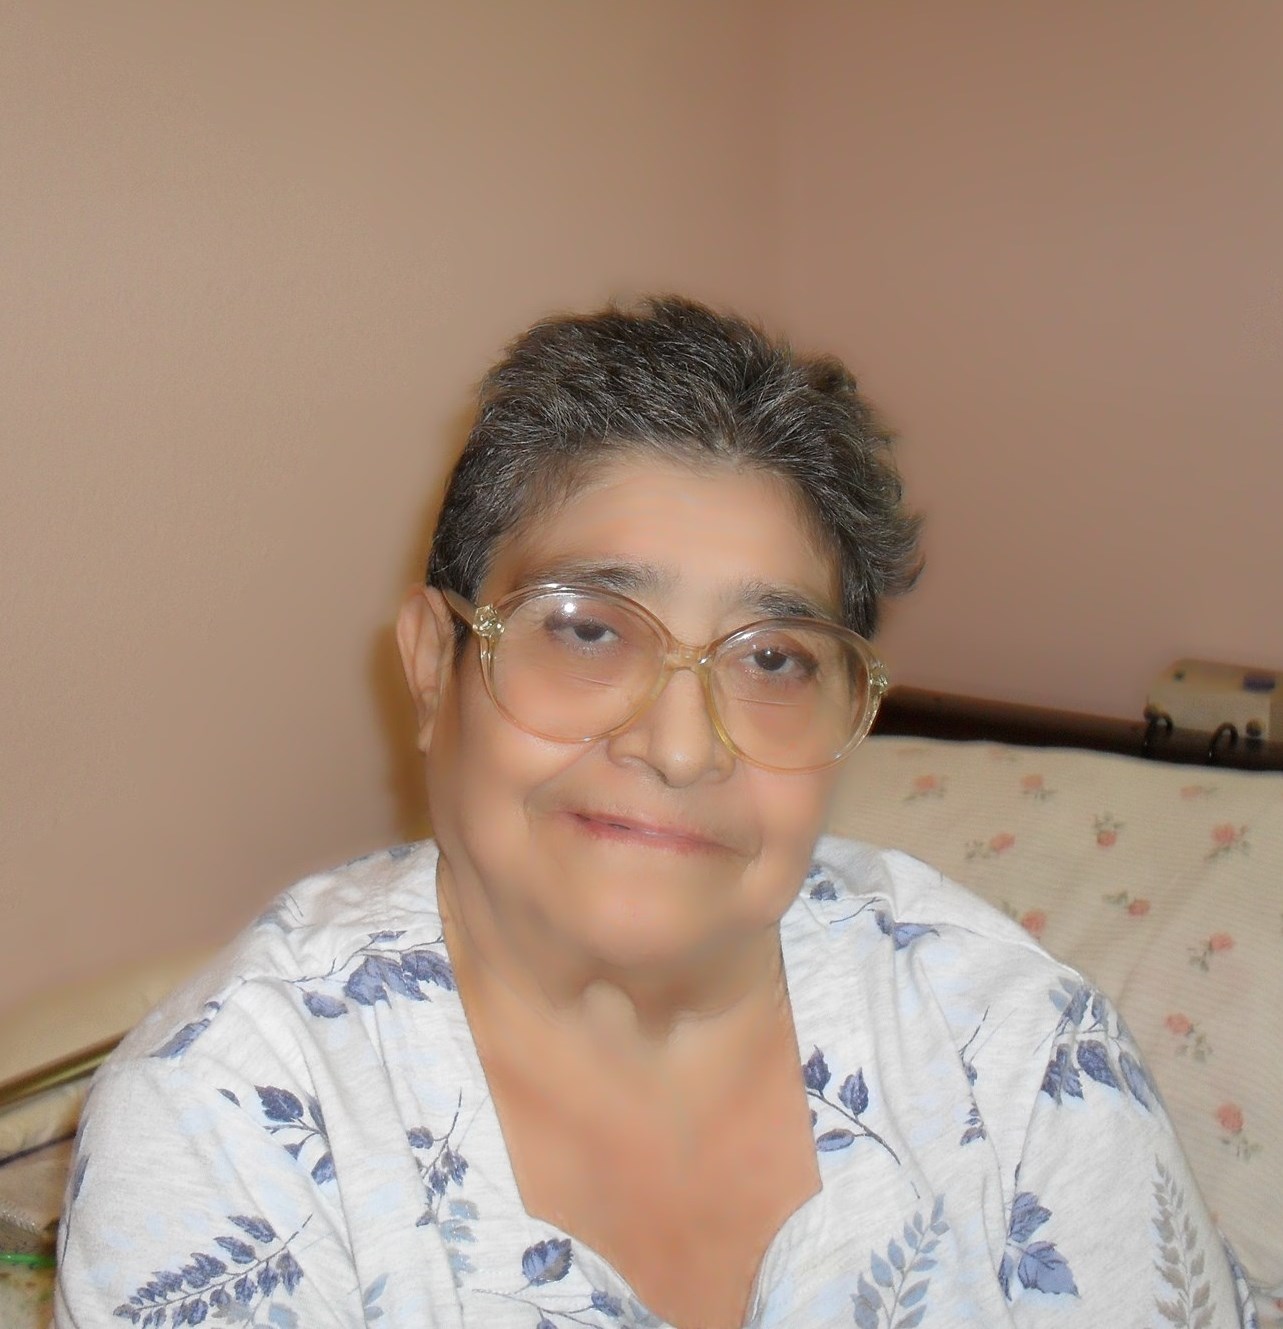 Obituary of Hilda Mendoza De Charles - 09/14/2021 - From the Family